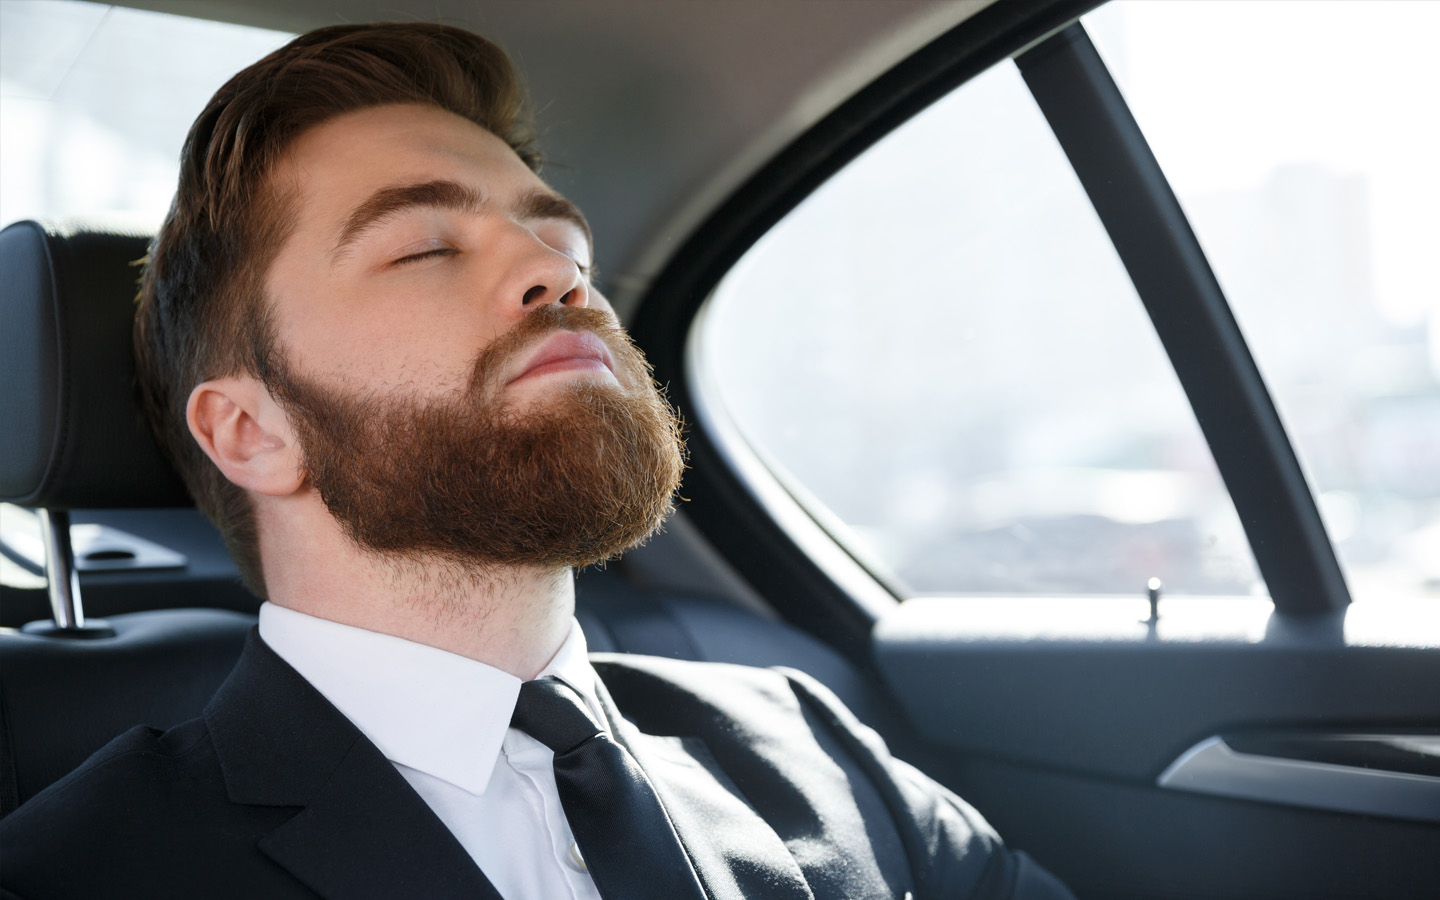 man sleeping in car